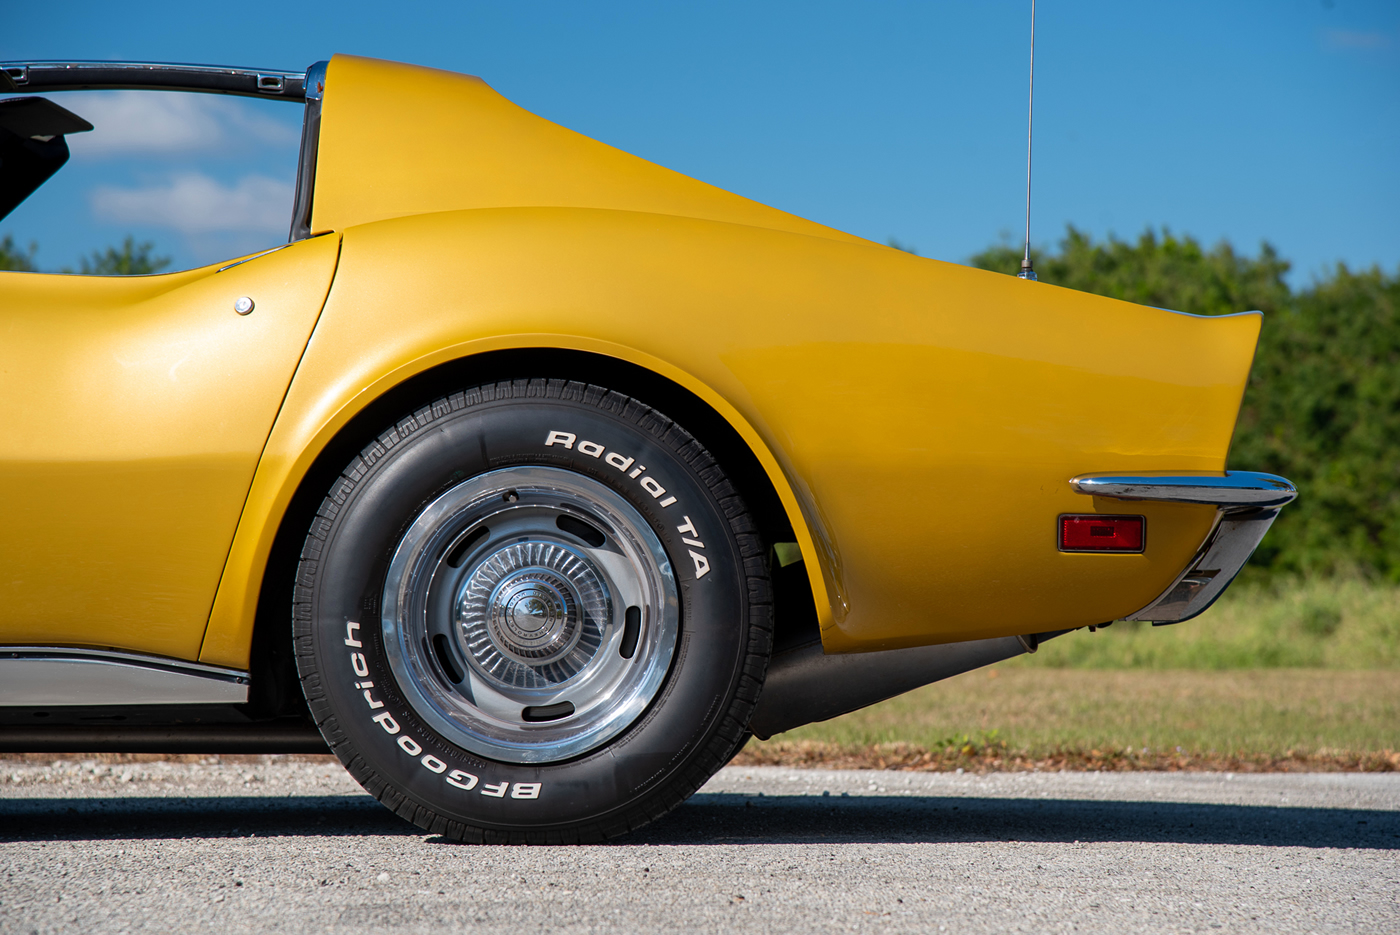 1971 Corvette Coupe in War Bonnet Yellow